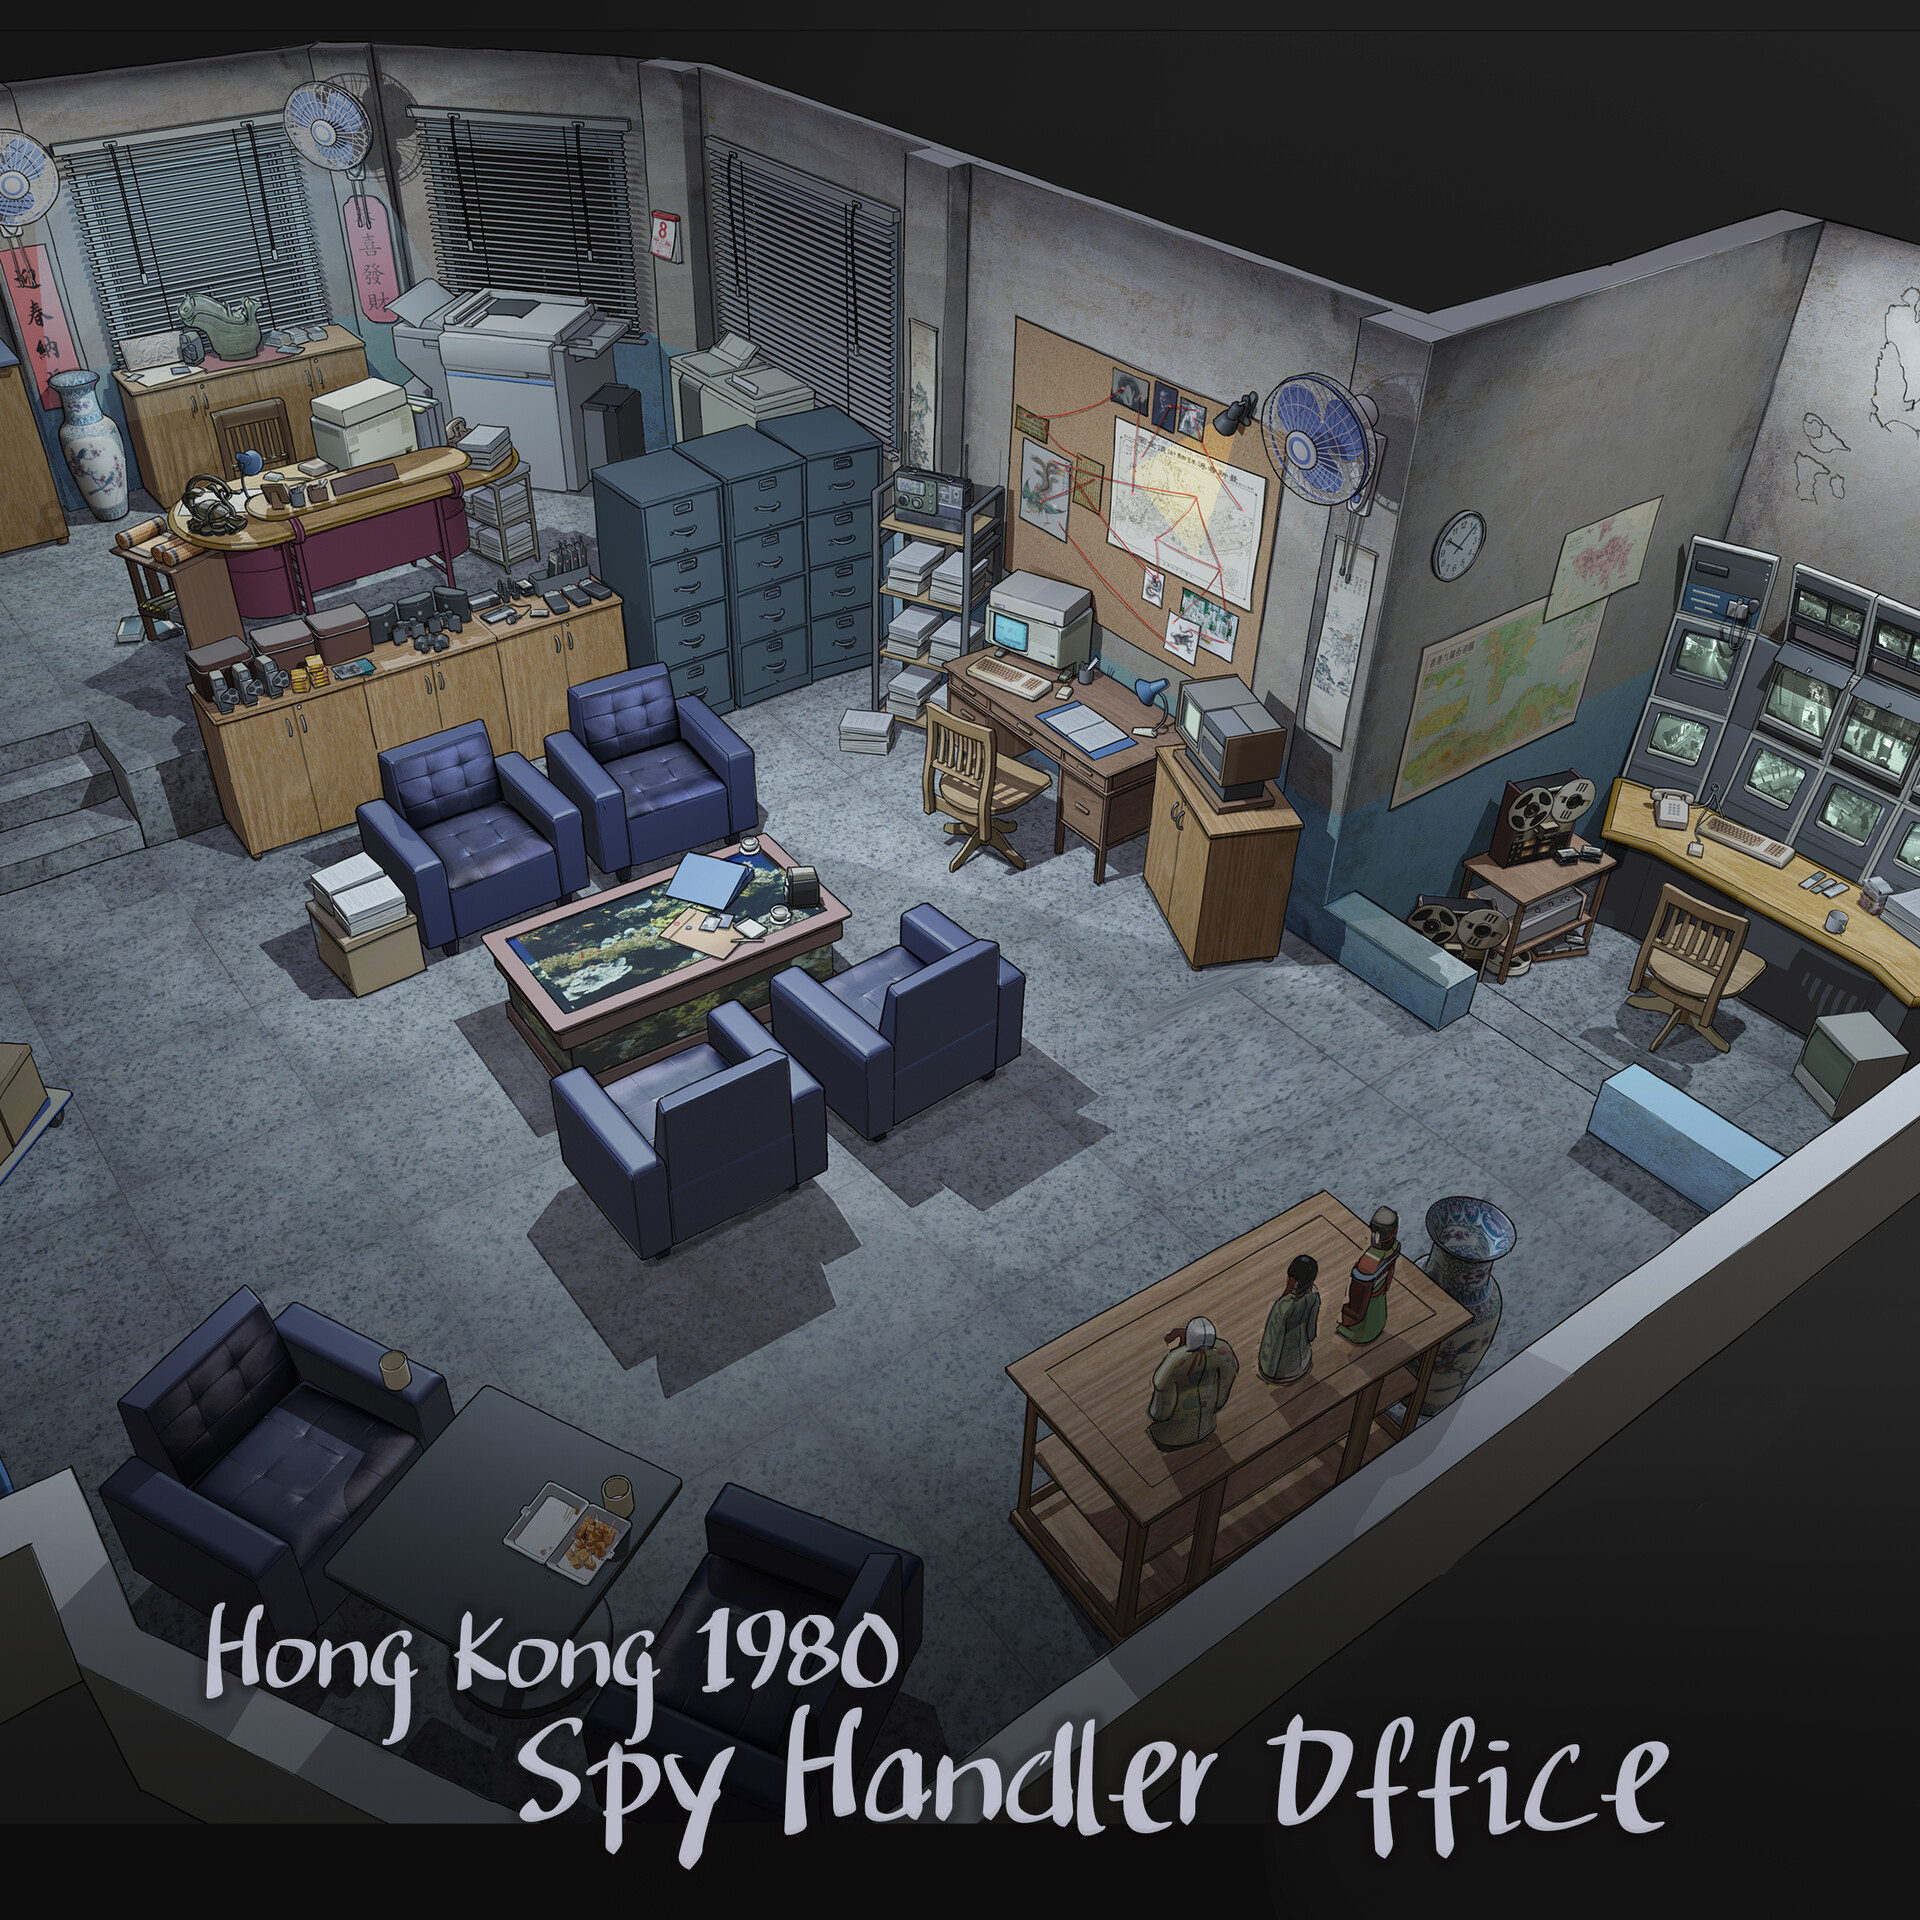 ArtStation - 1980 Hong Kong Spy Handler Office